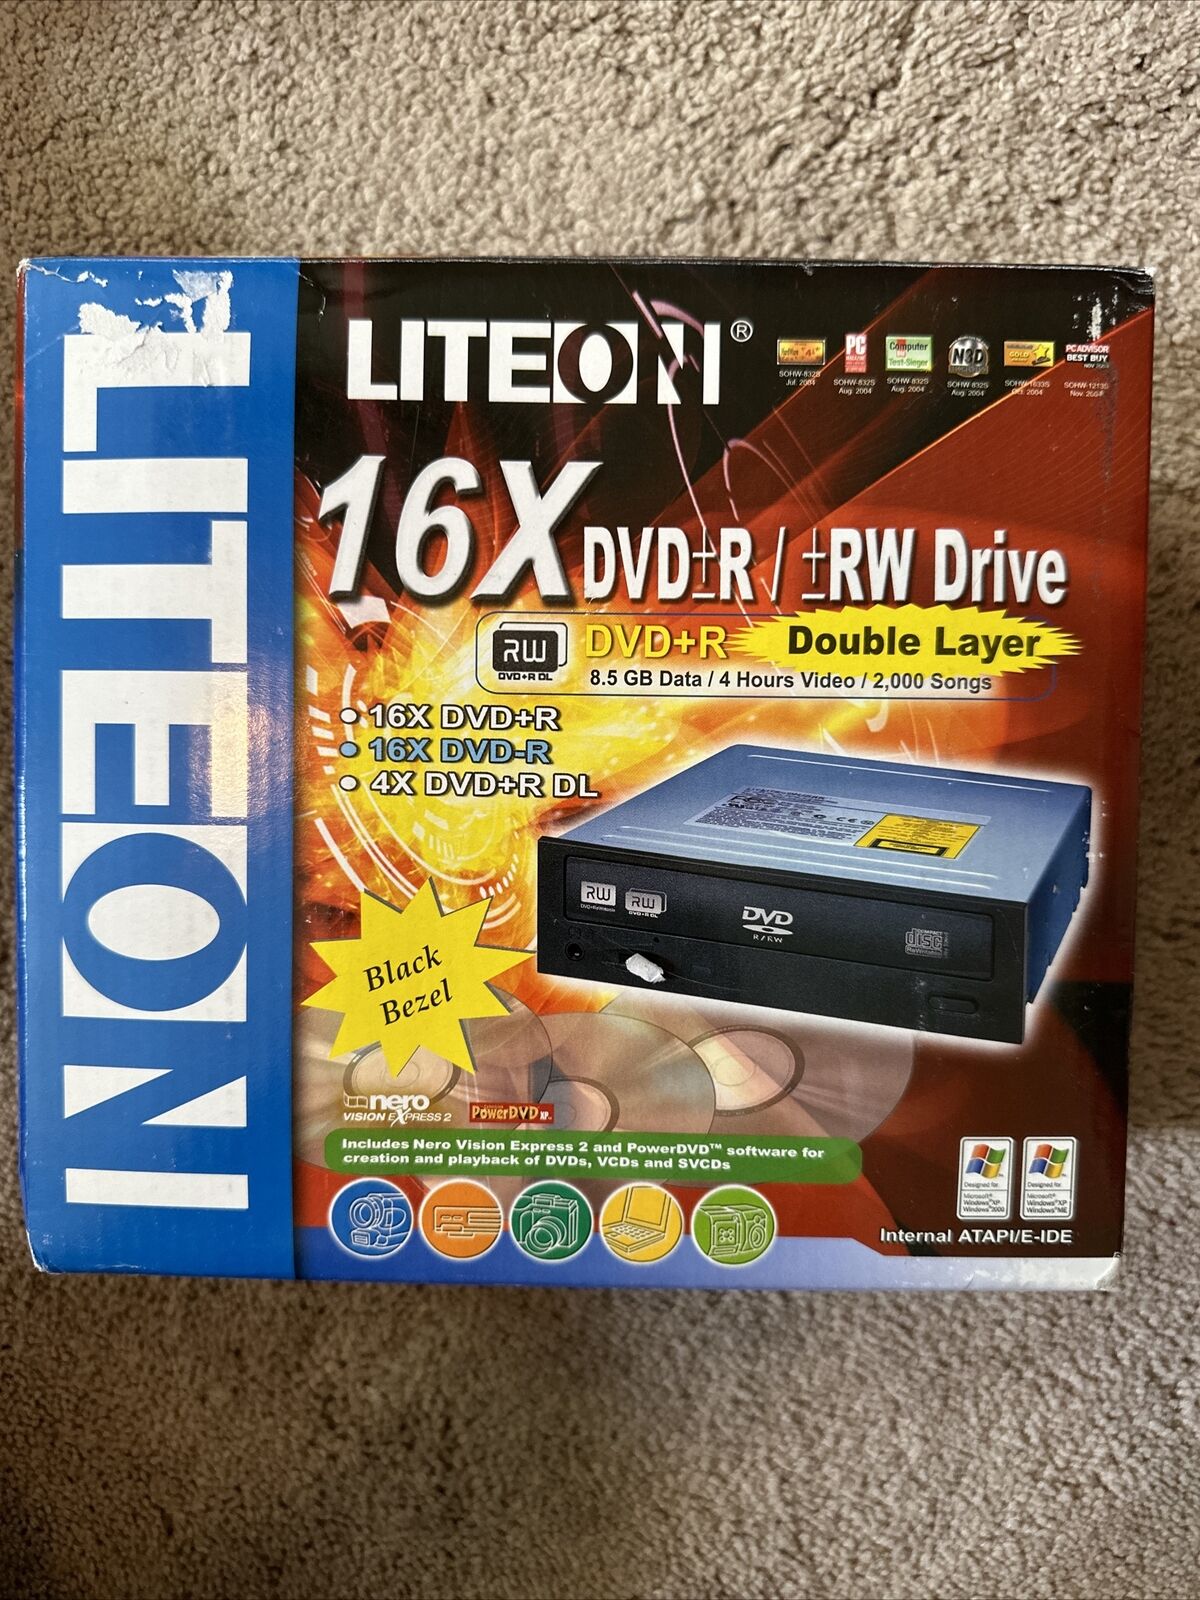 LITEON 16x DVD+R / +RW Drive DL Model SOHW-1673S06C Rewriter DVD / CD